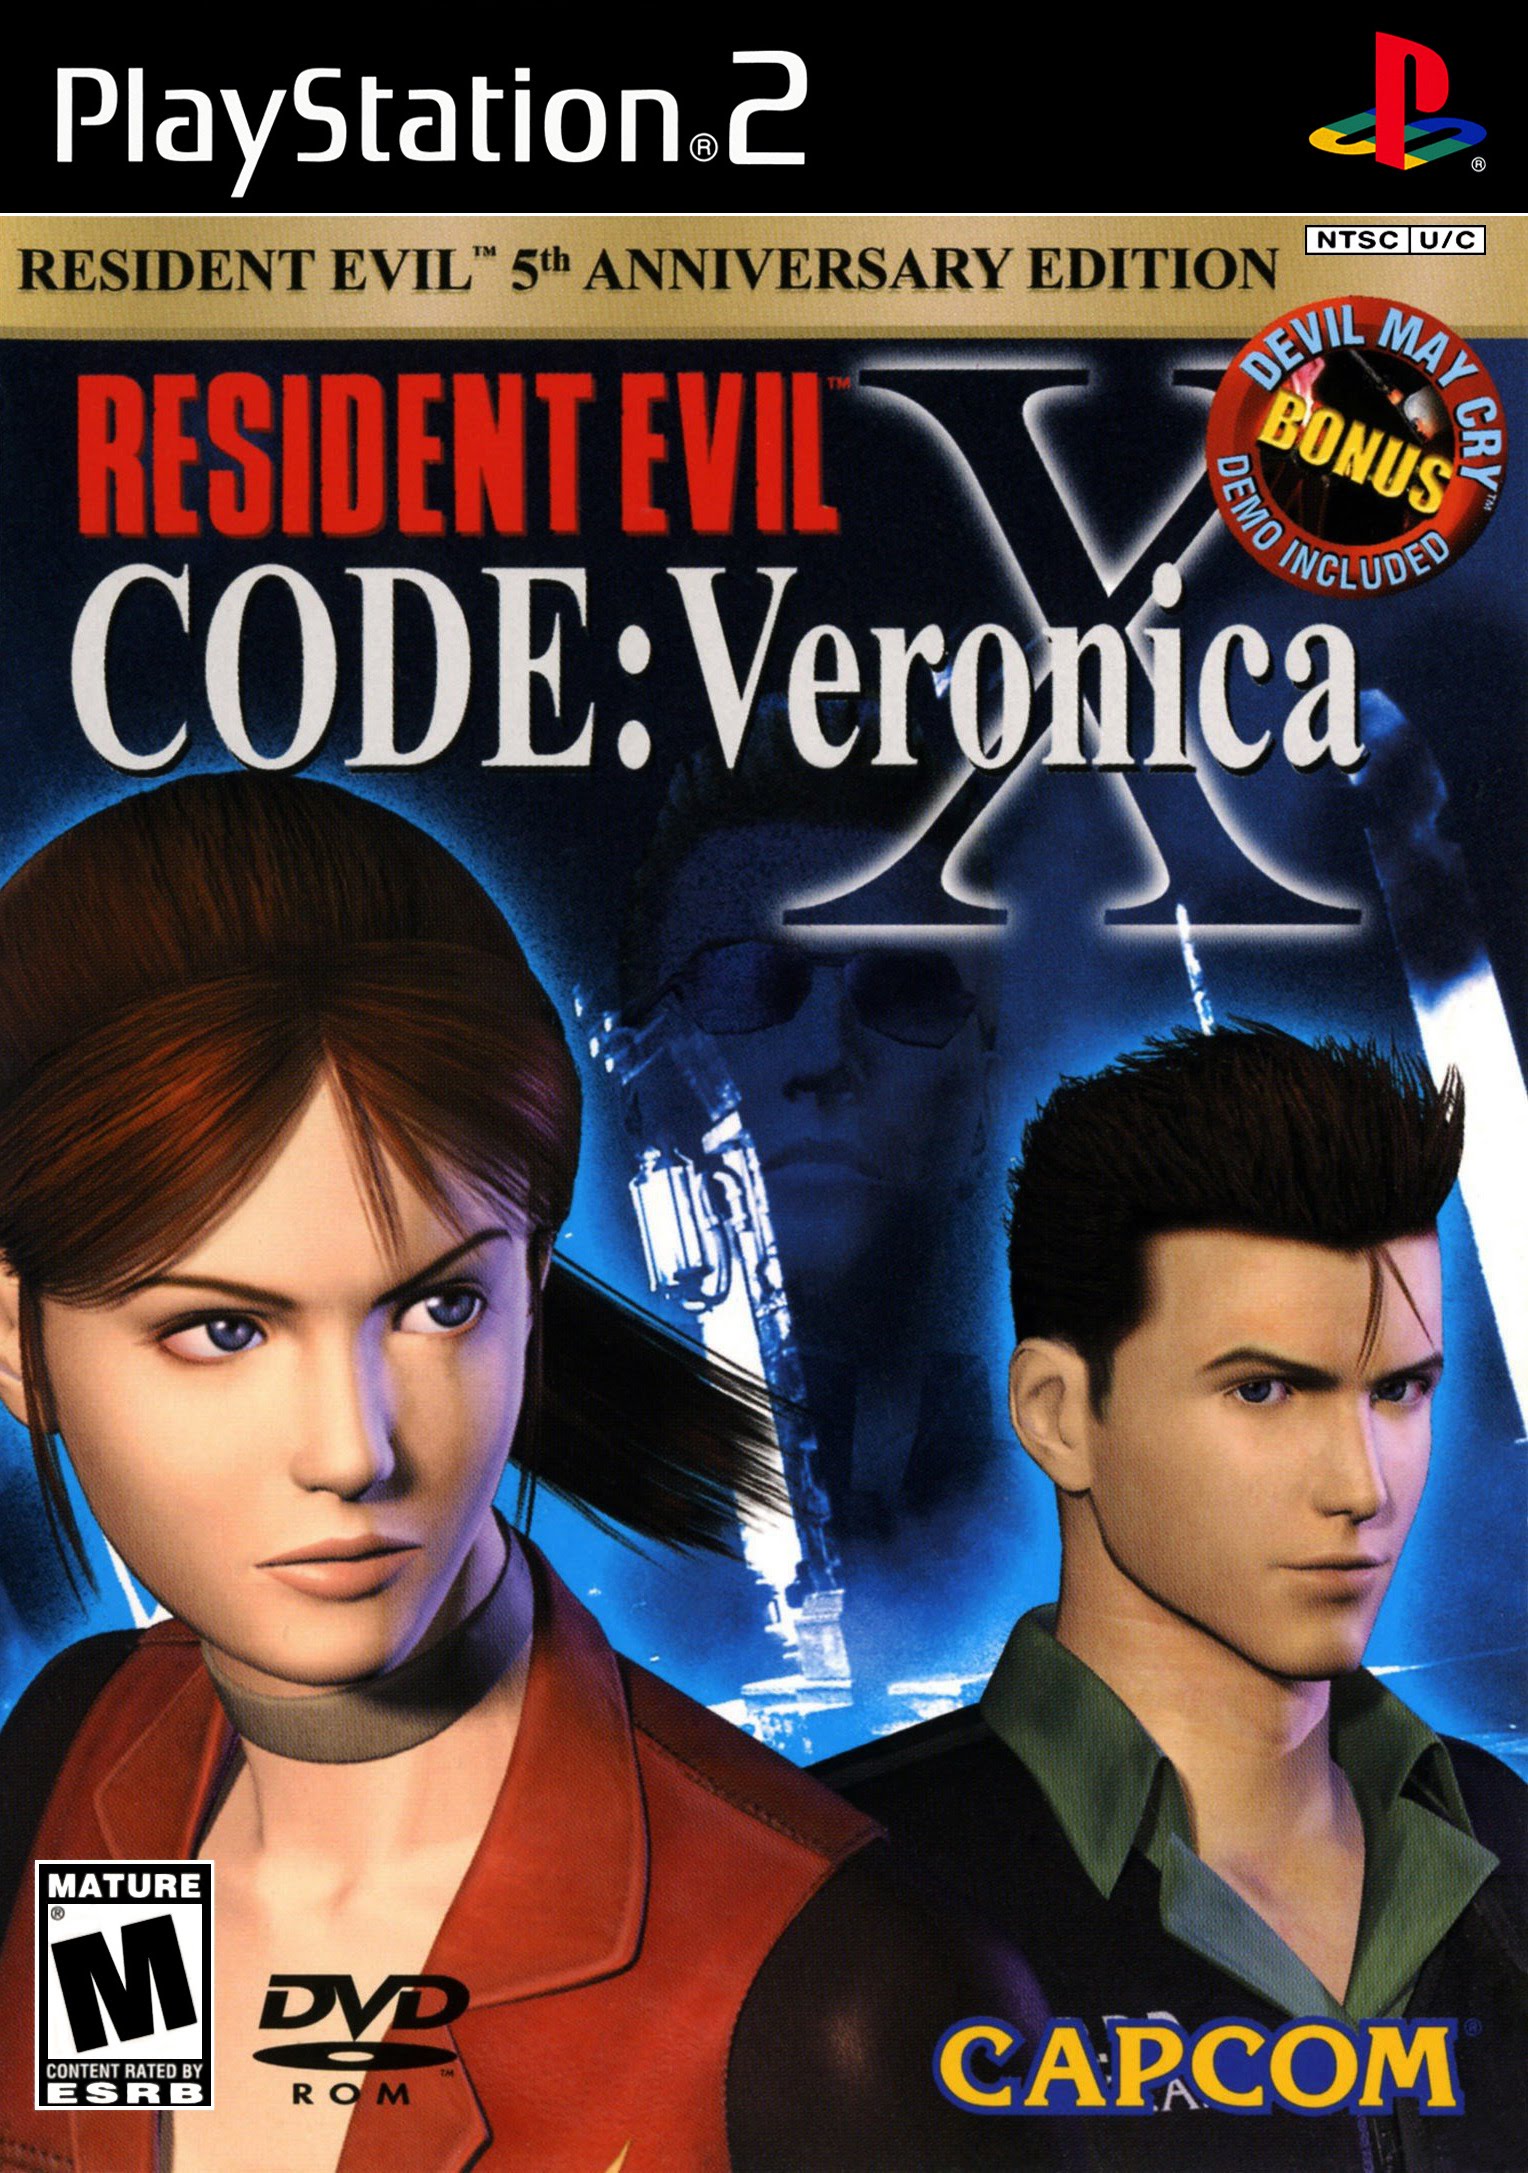 RESIDENT EVIL CODE: Veronica X Midia Digital [XBOX 360] - WR Games